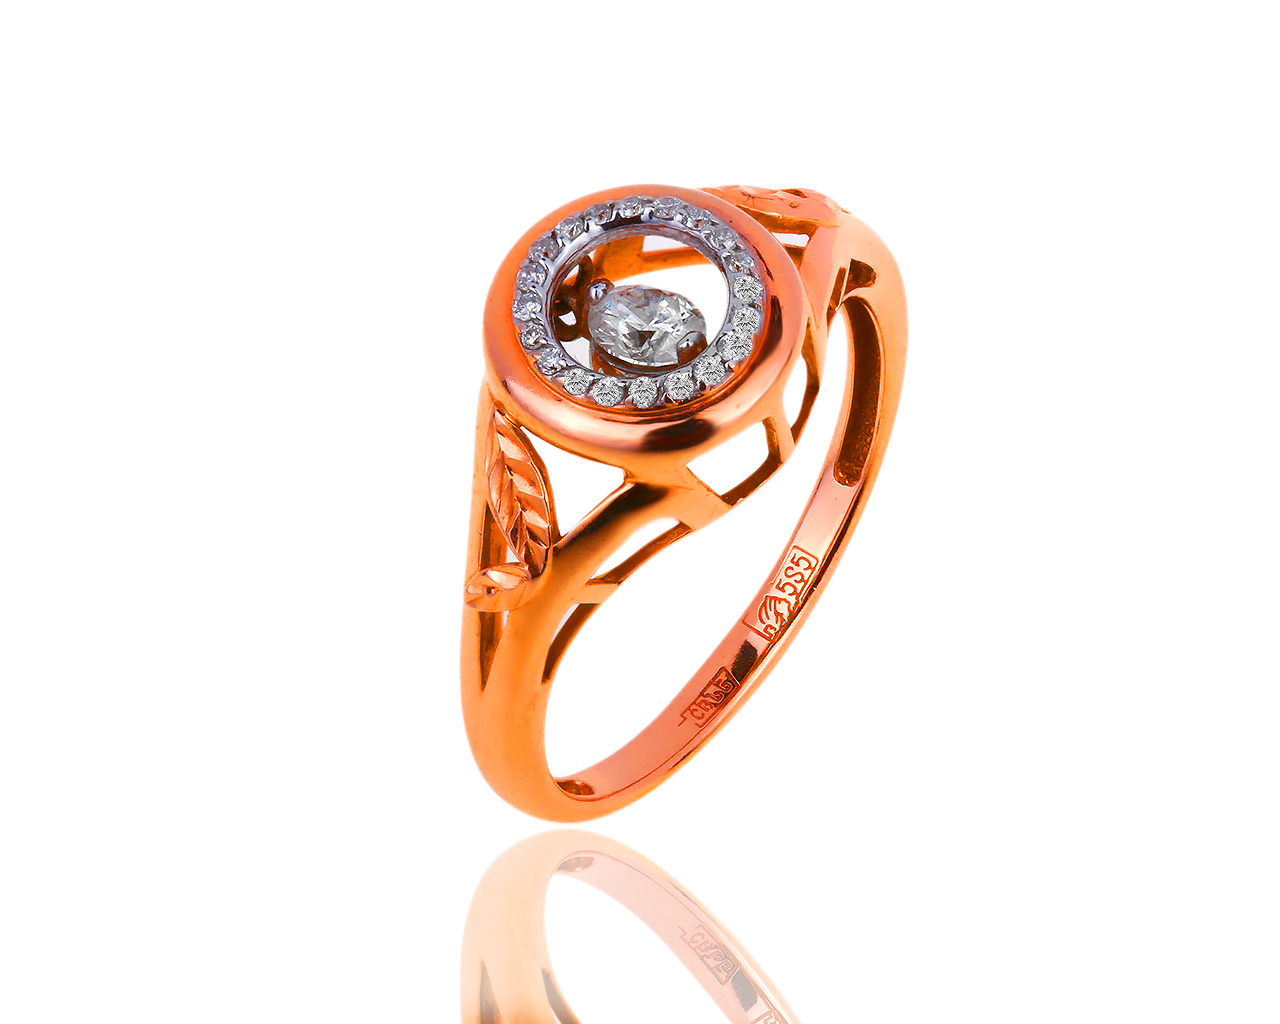 Золотое кольцо с бриллиантами 0.23ct